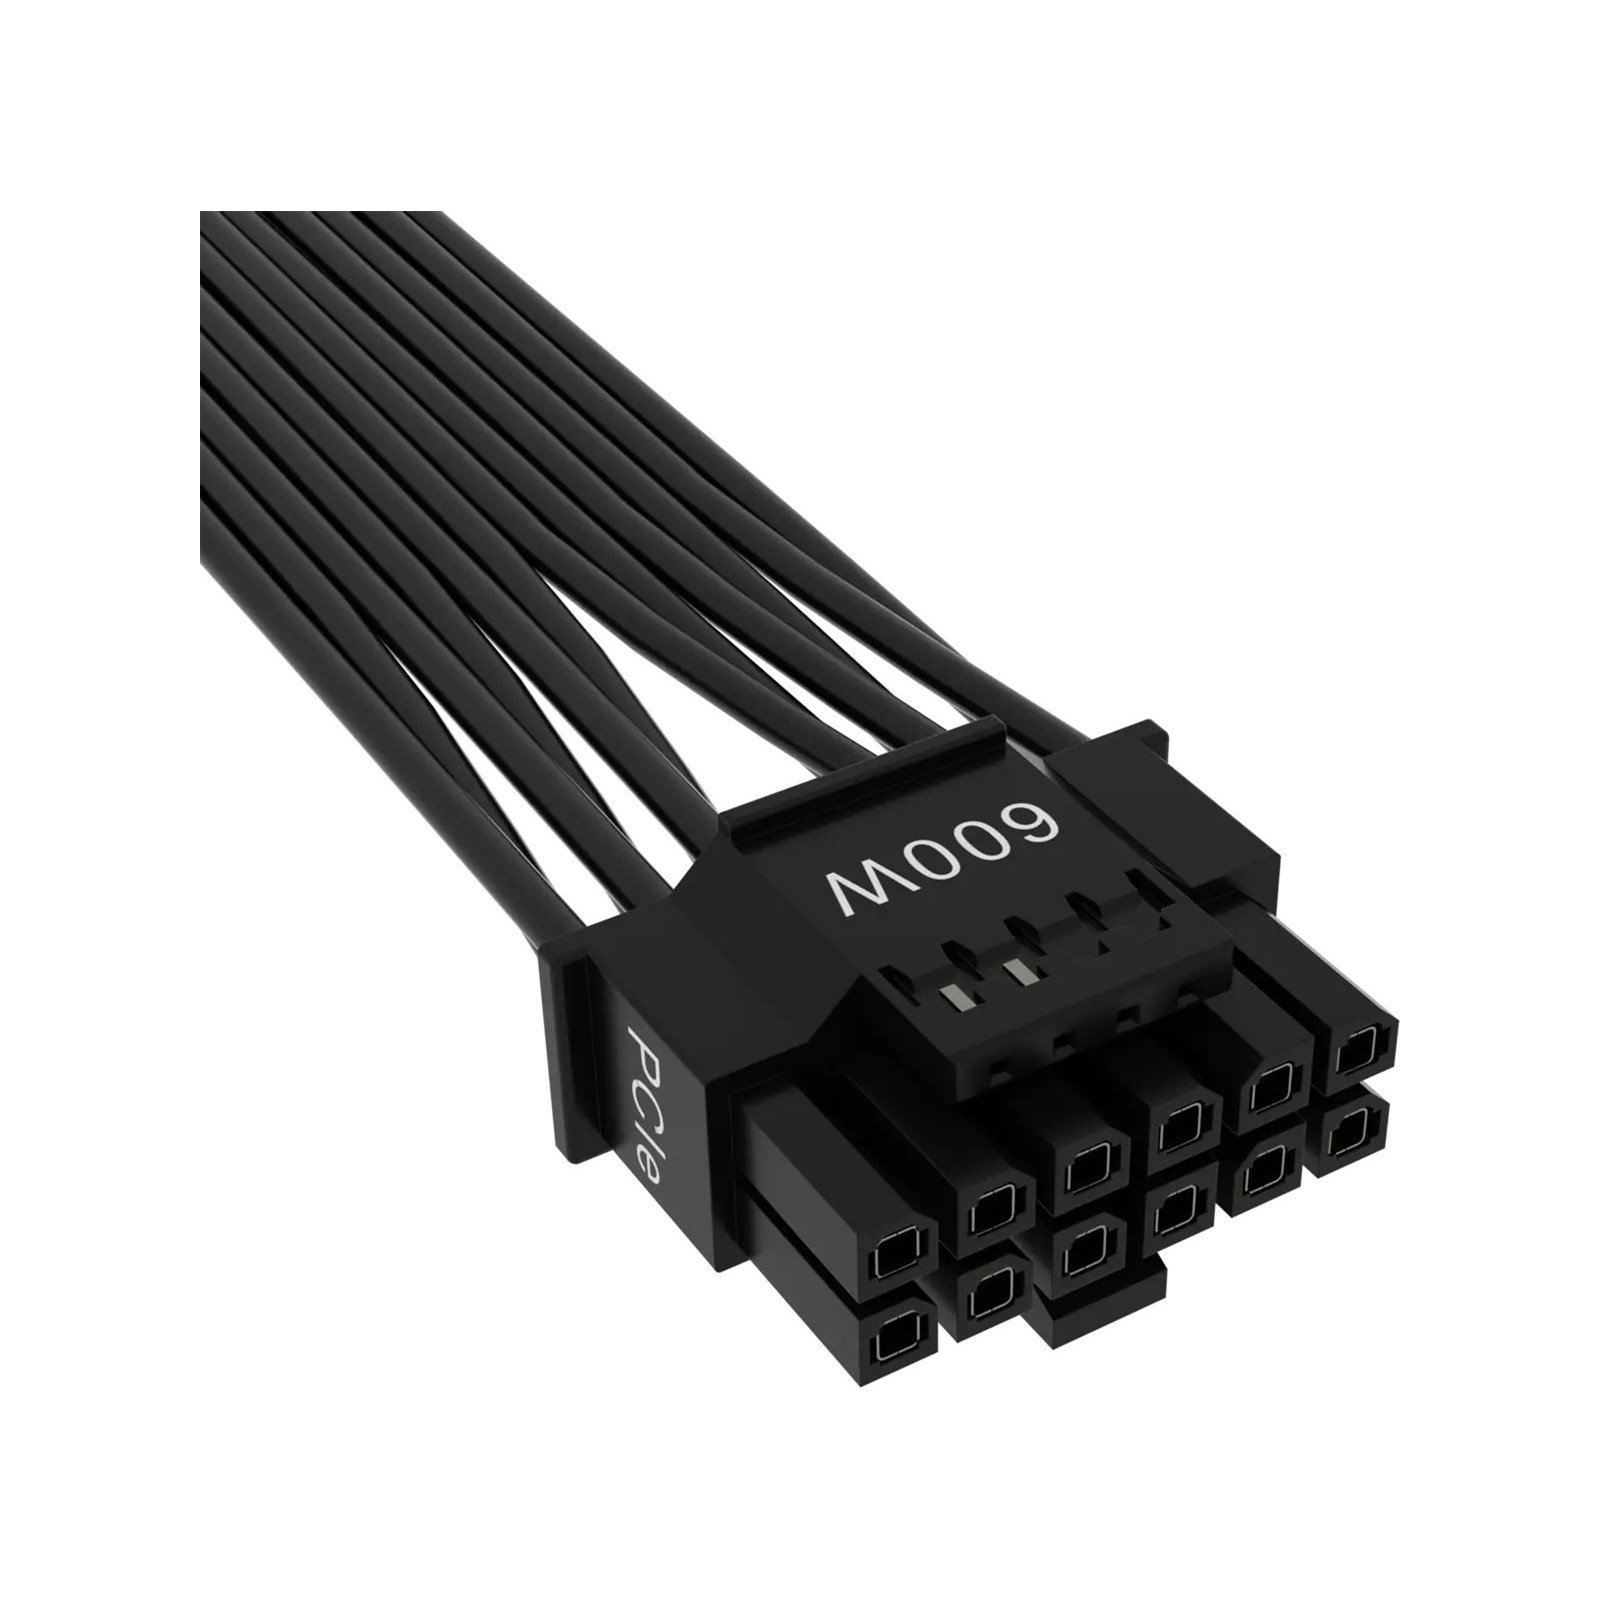 Câble d'alimentation Corsair 600W PCIe 5.0 12VHPWR Type 4 Premium